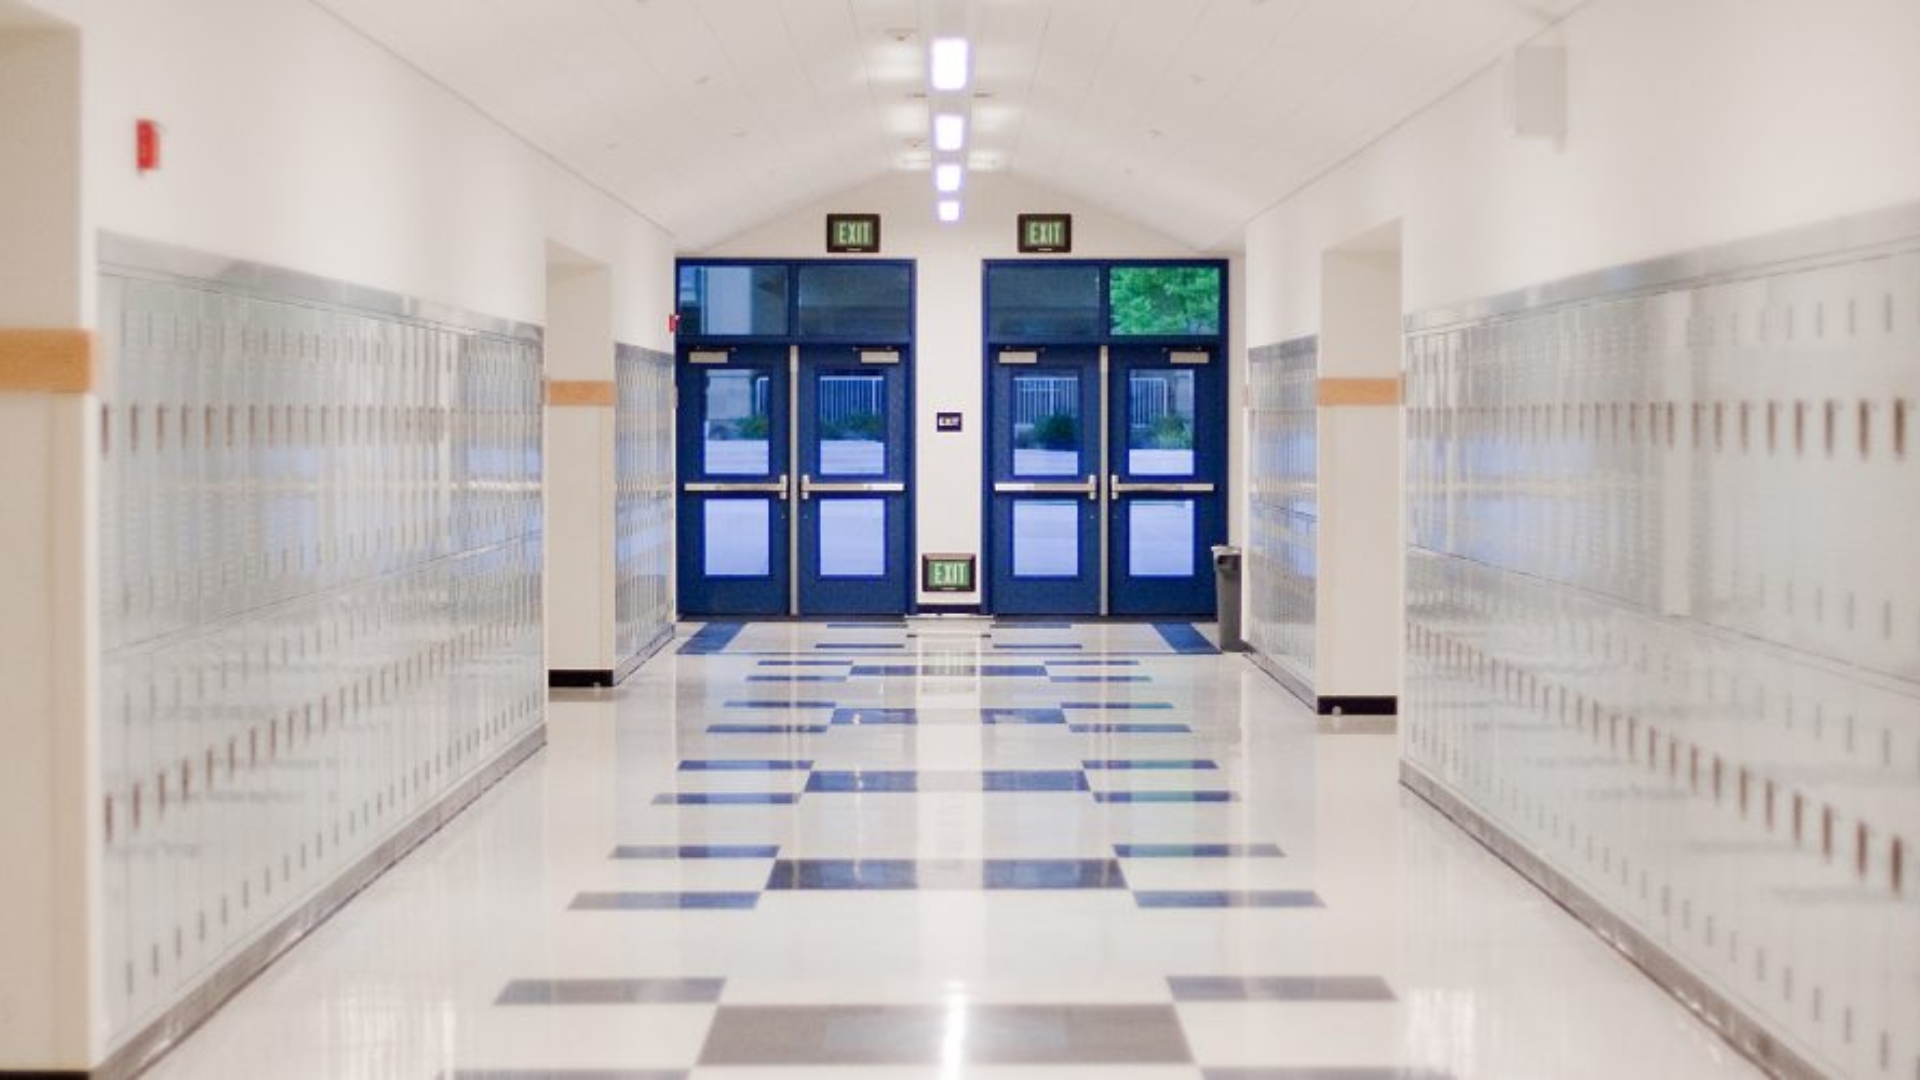 A set of double door with panic hardware in a school hallway